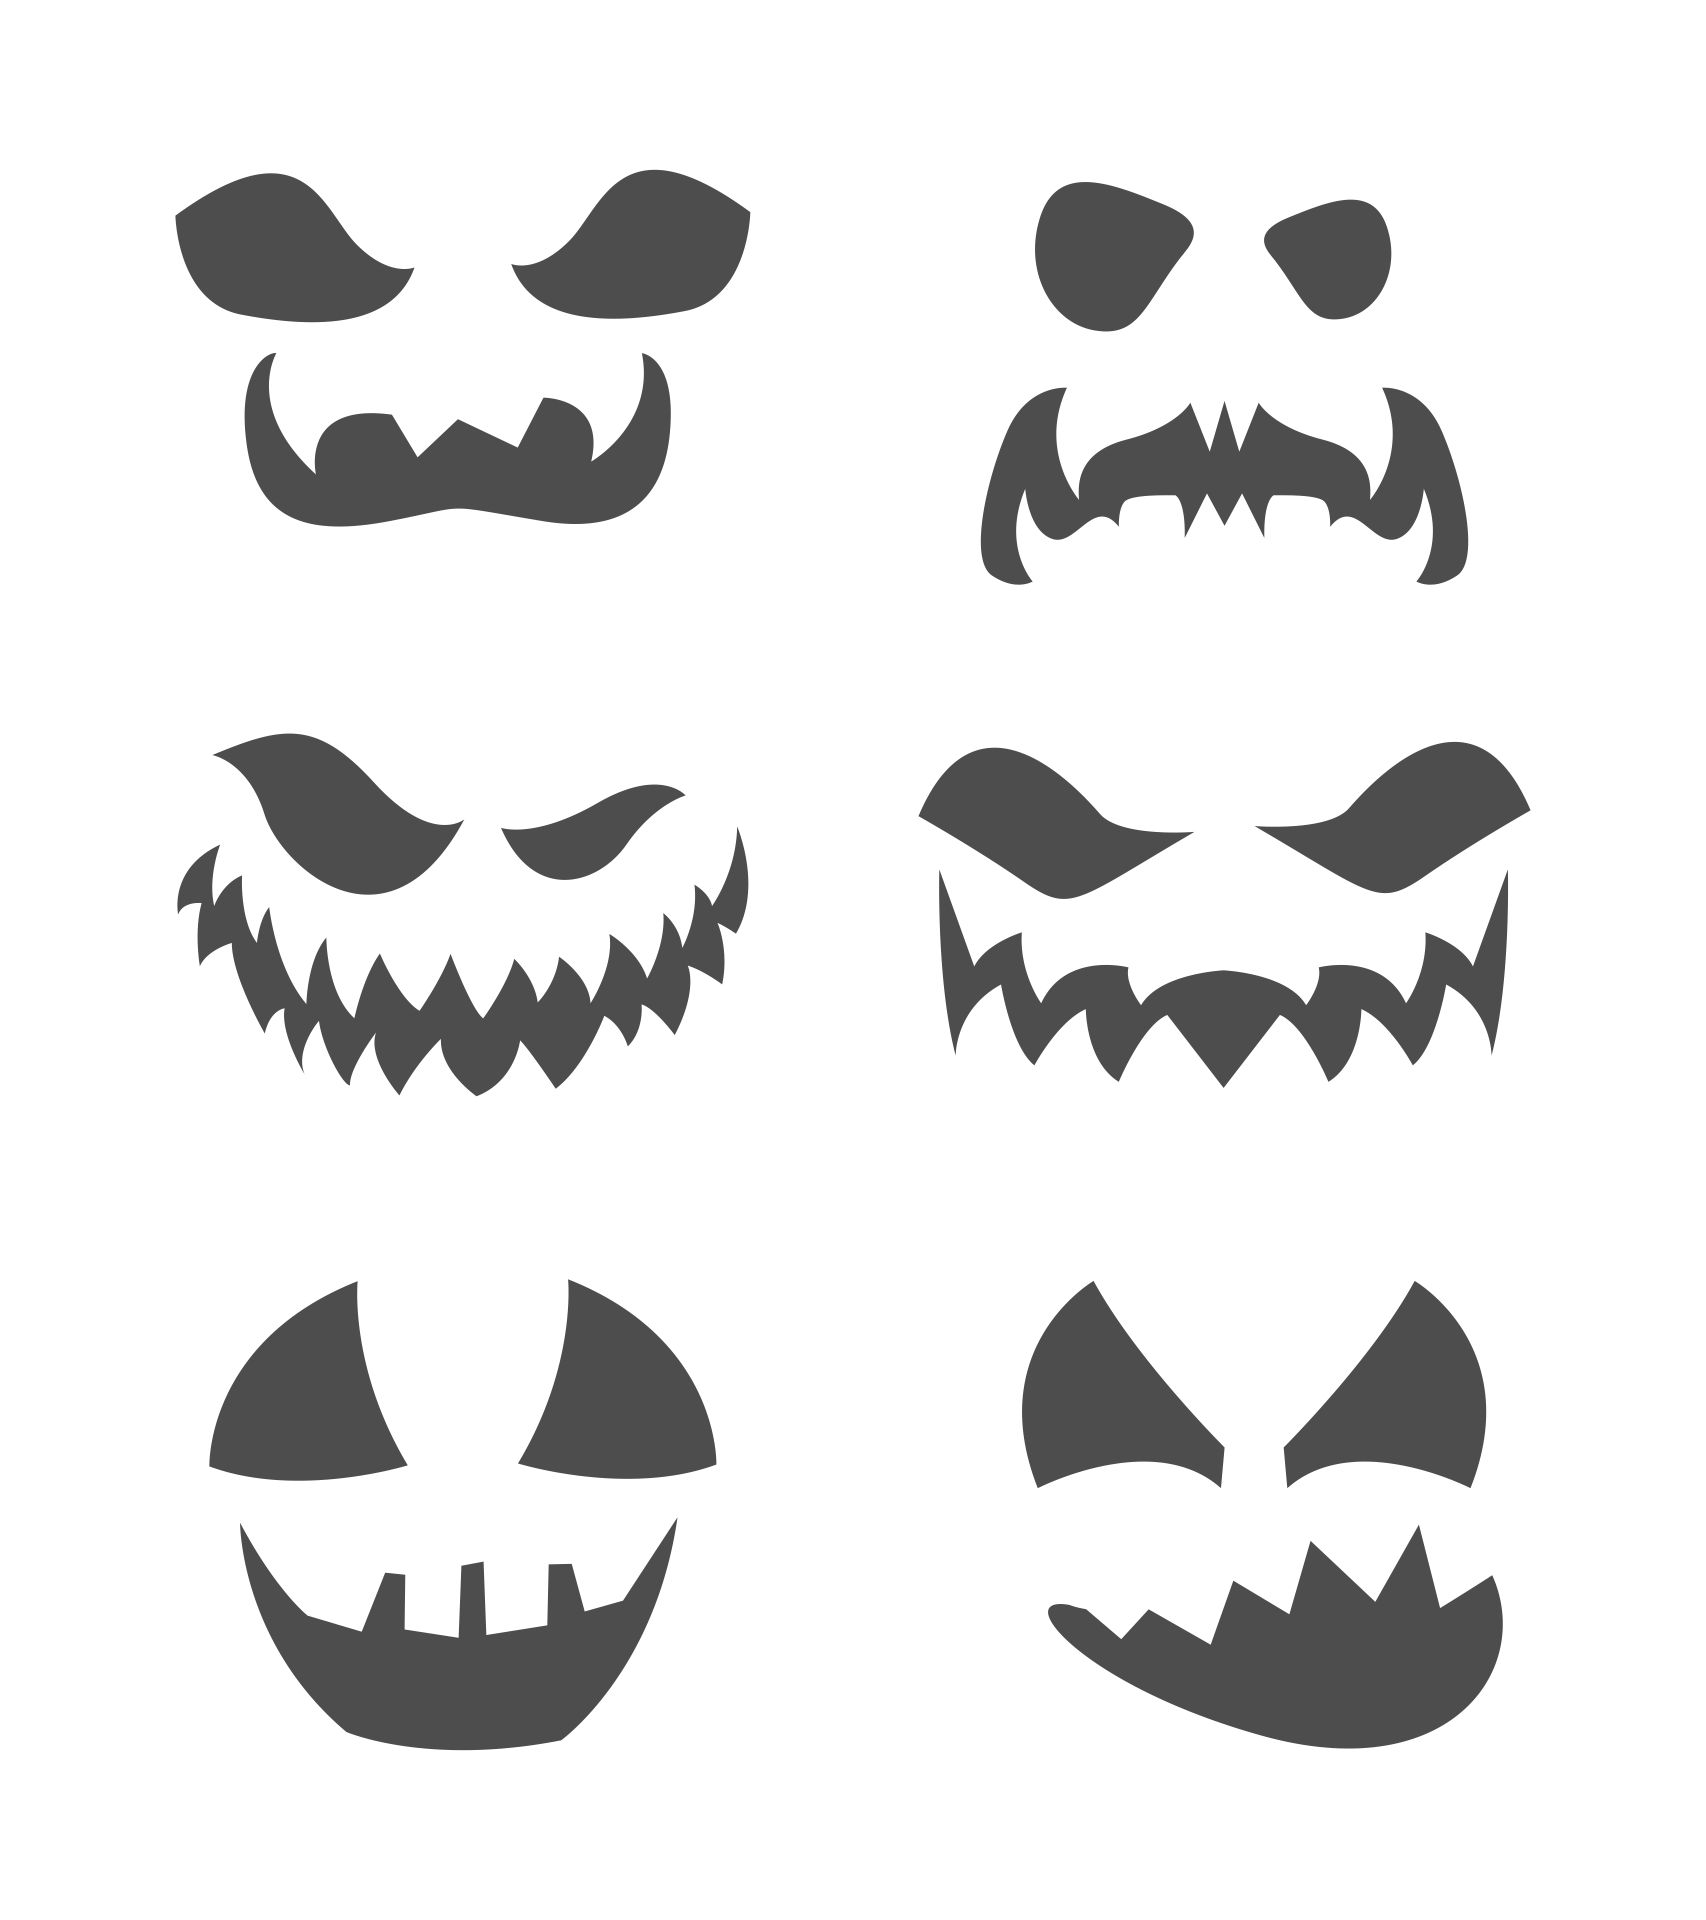 pin-by-jennifer-mechem-on-digi-stamps-halloween-pumpkin-templates